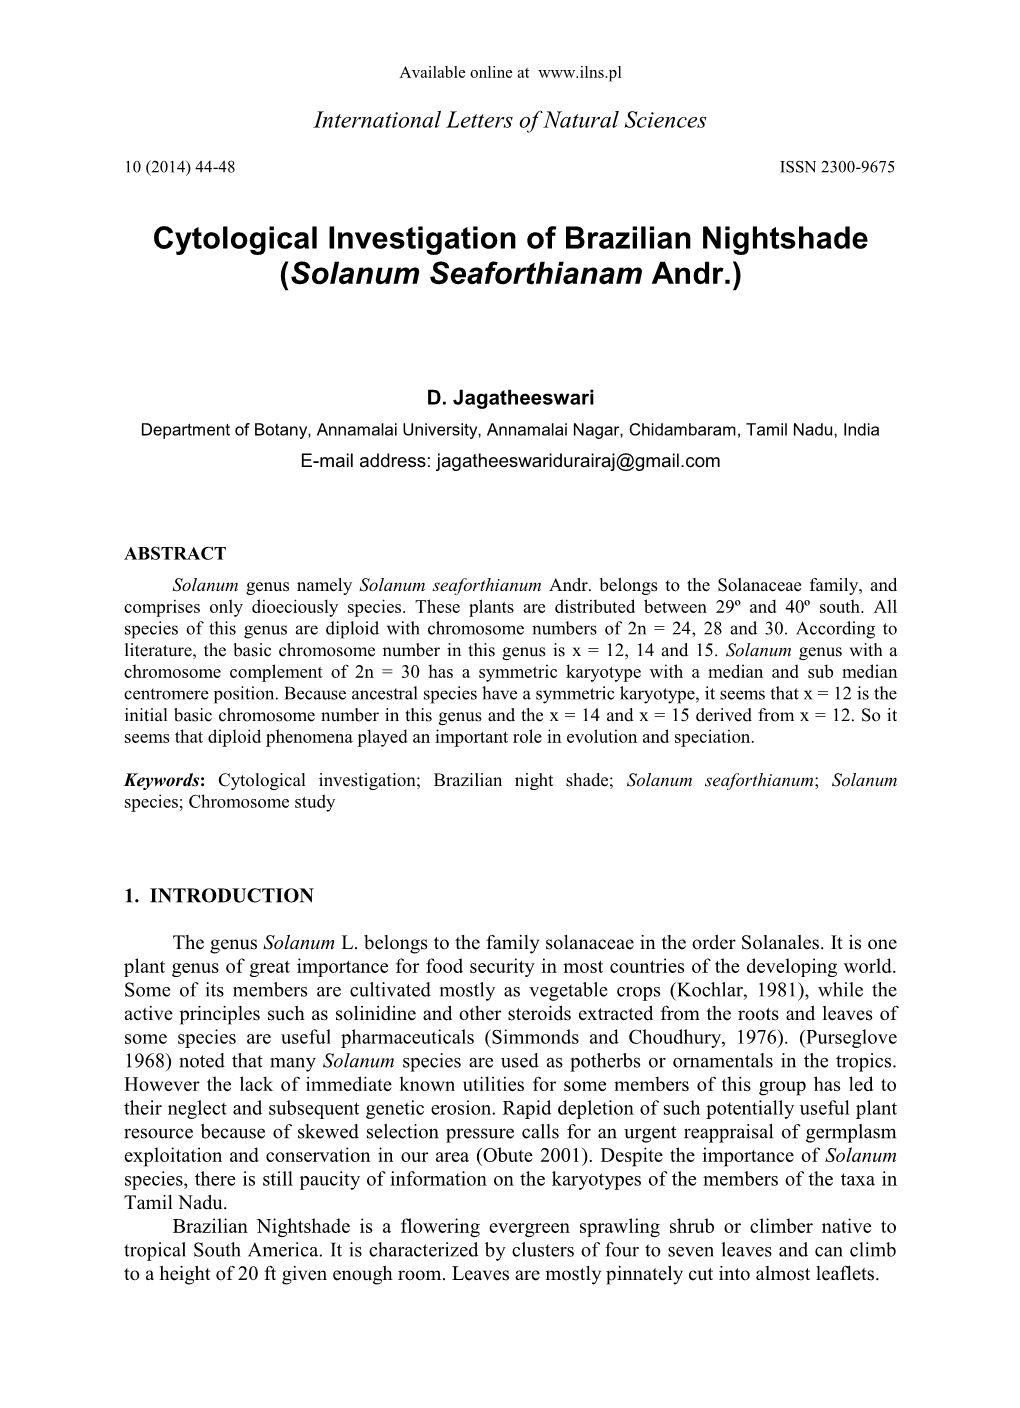 Cytological Investigation of Brazilian Nightshade (Solanum Seaforthianam Andr.)